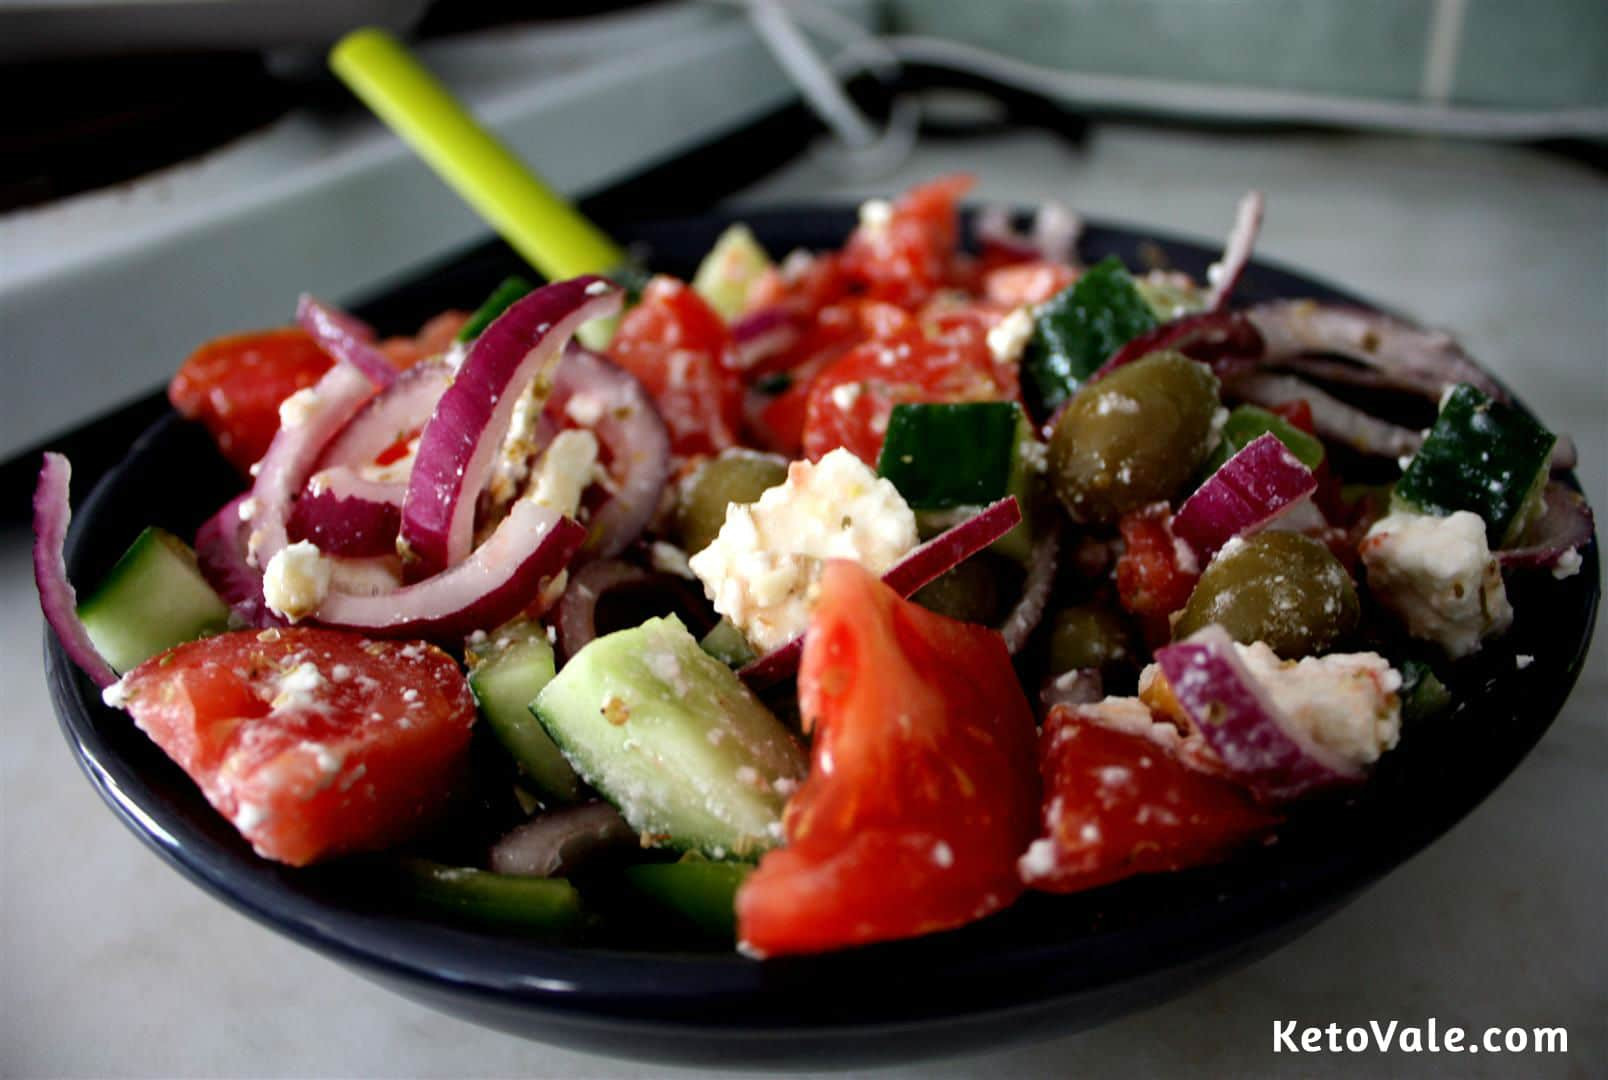 Keto Diet Recipes Salads
 Greek Keto Salad Recipe Delicious and Easy To Make